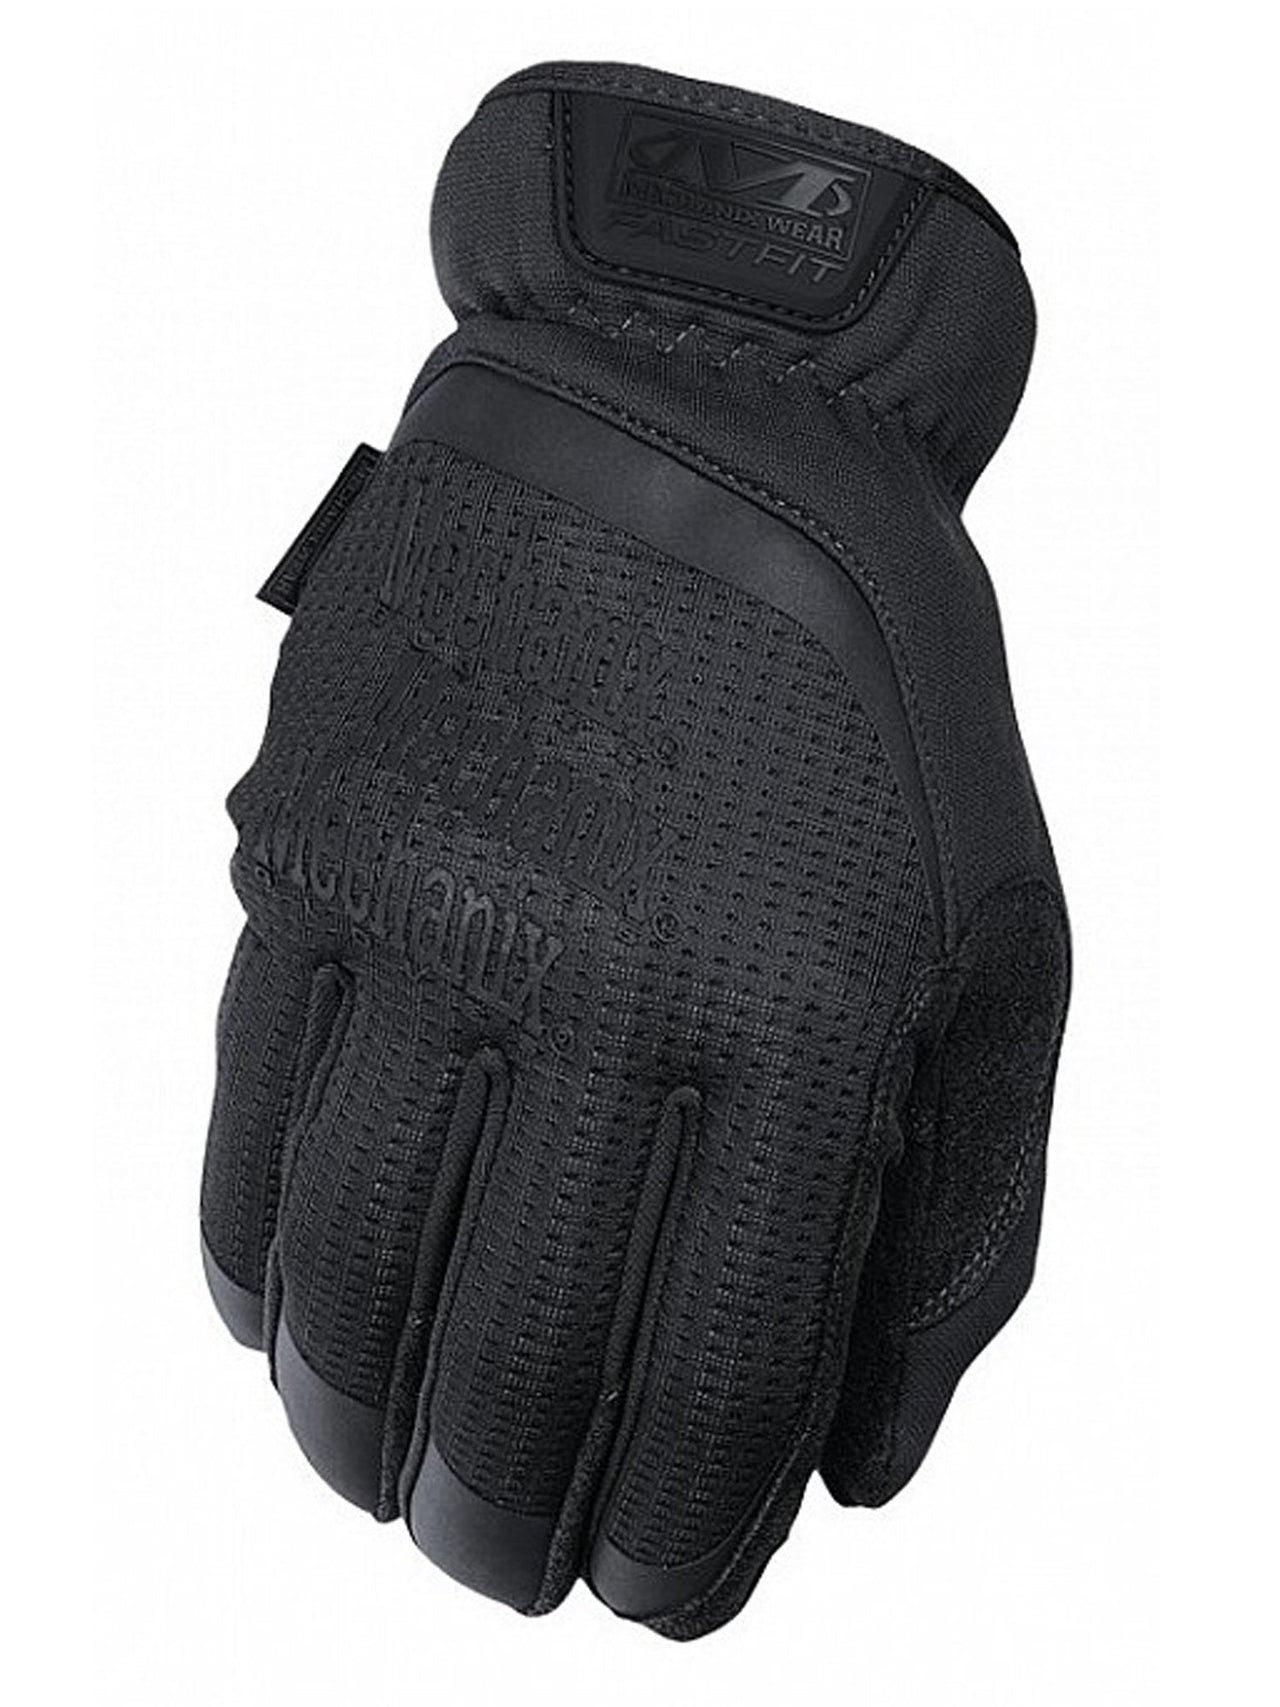 Mechanix Wear Fastfit Gloves - TacSource